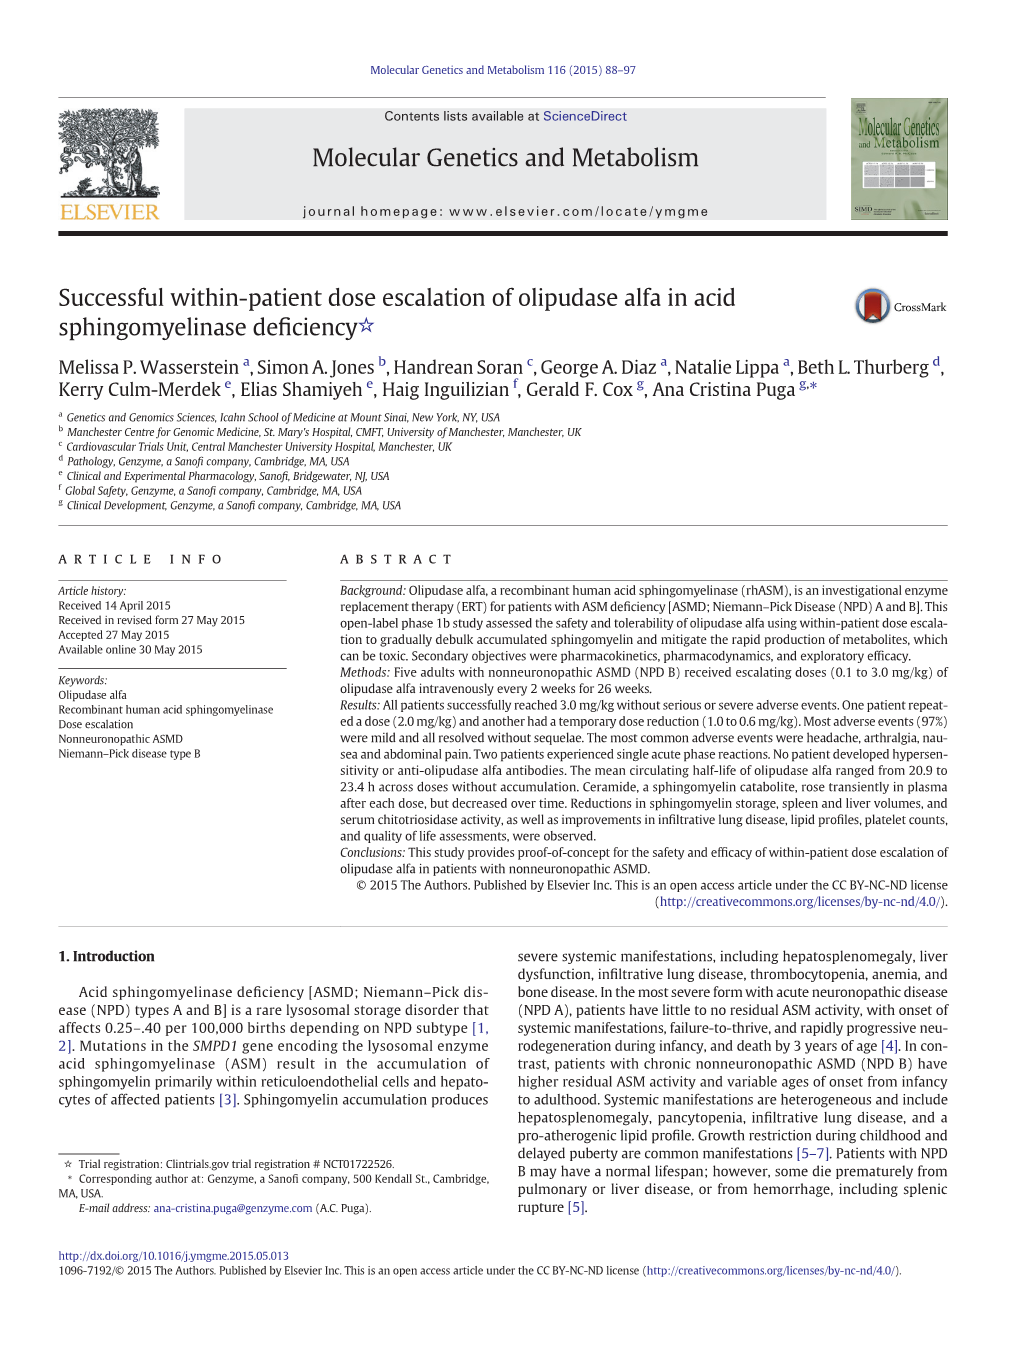 Successful Within-Patient Dose Escalation of Olipudase Alfa in Acid Sphingomyelinase Deficiency